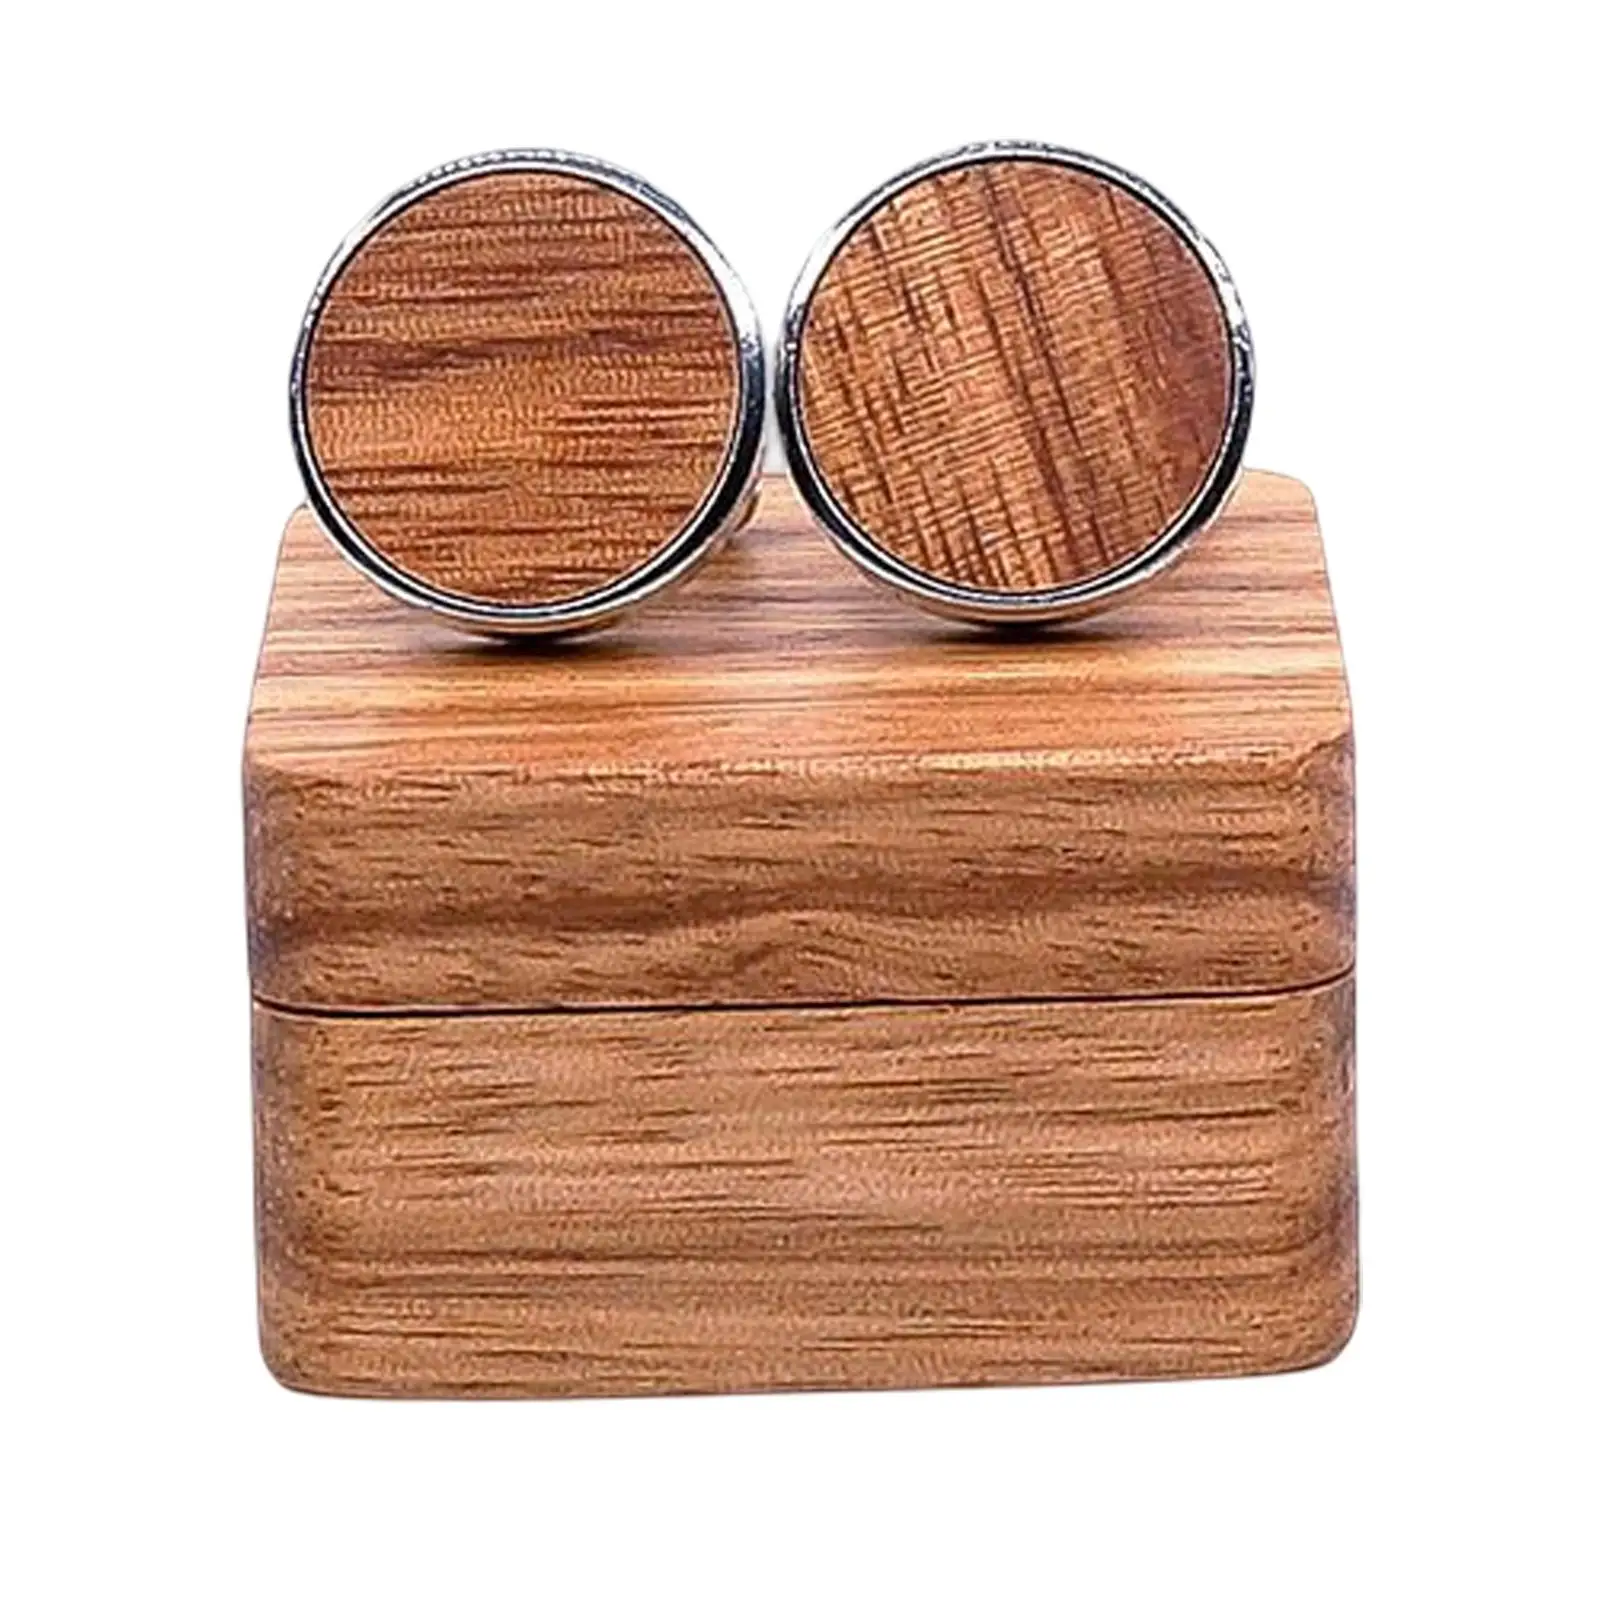 Rustic Cufflinks +Wood Box Handsome Cuff Links for Birthday Wedding Husband Gifts